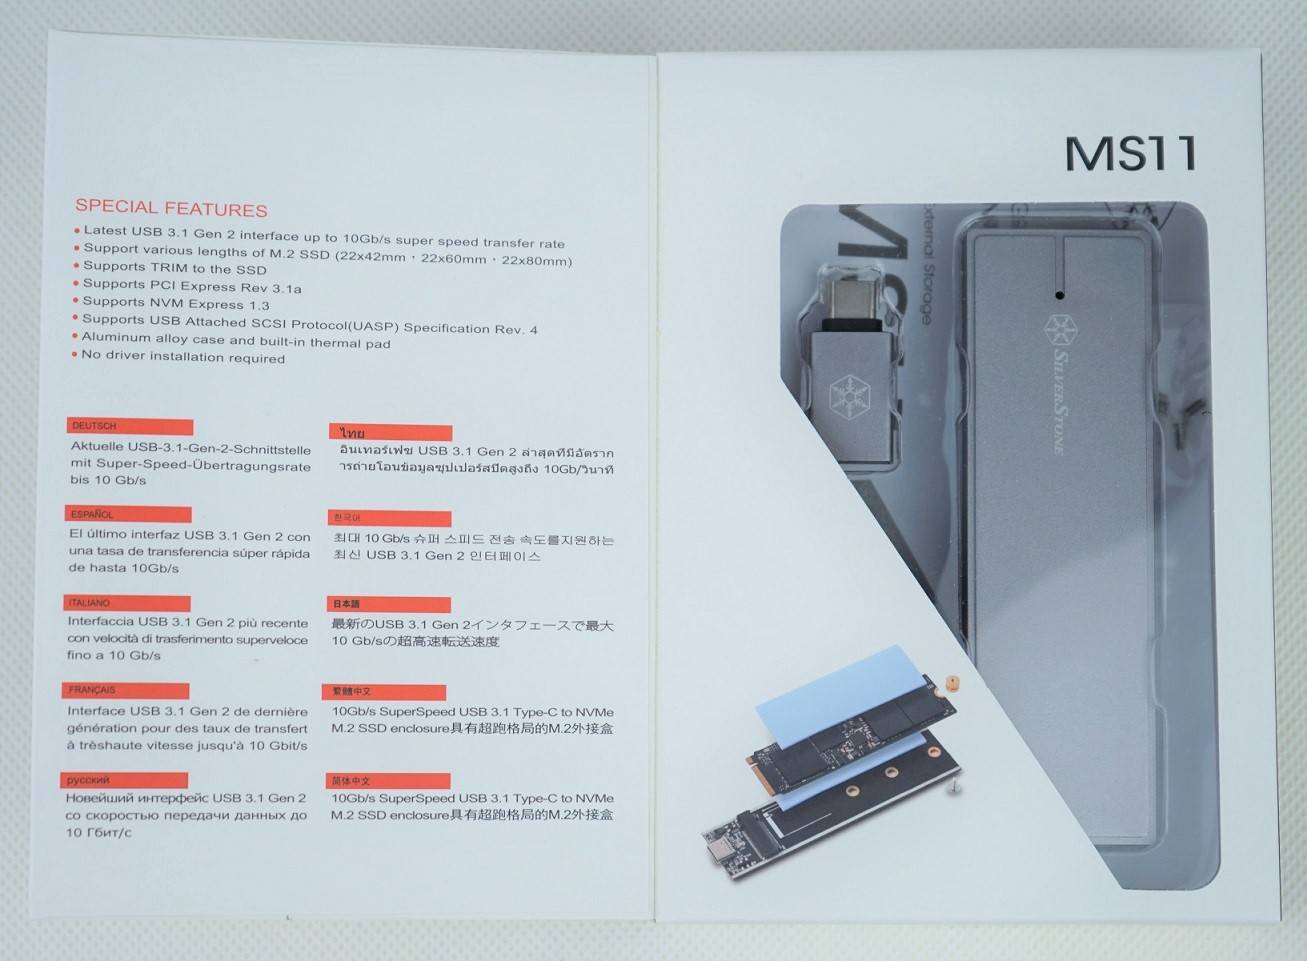 SilverStone MS11 External M.2 SSD Enclosure